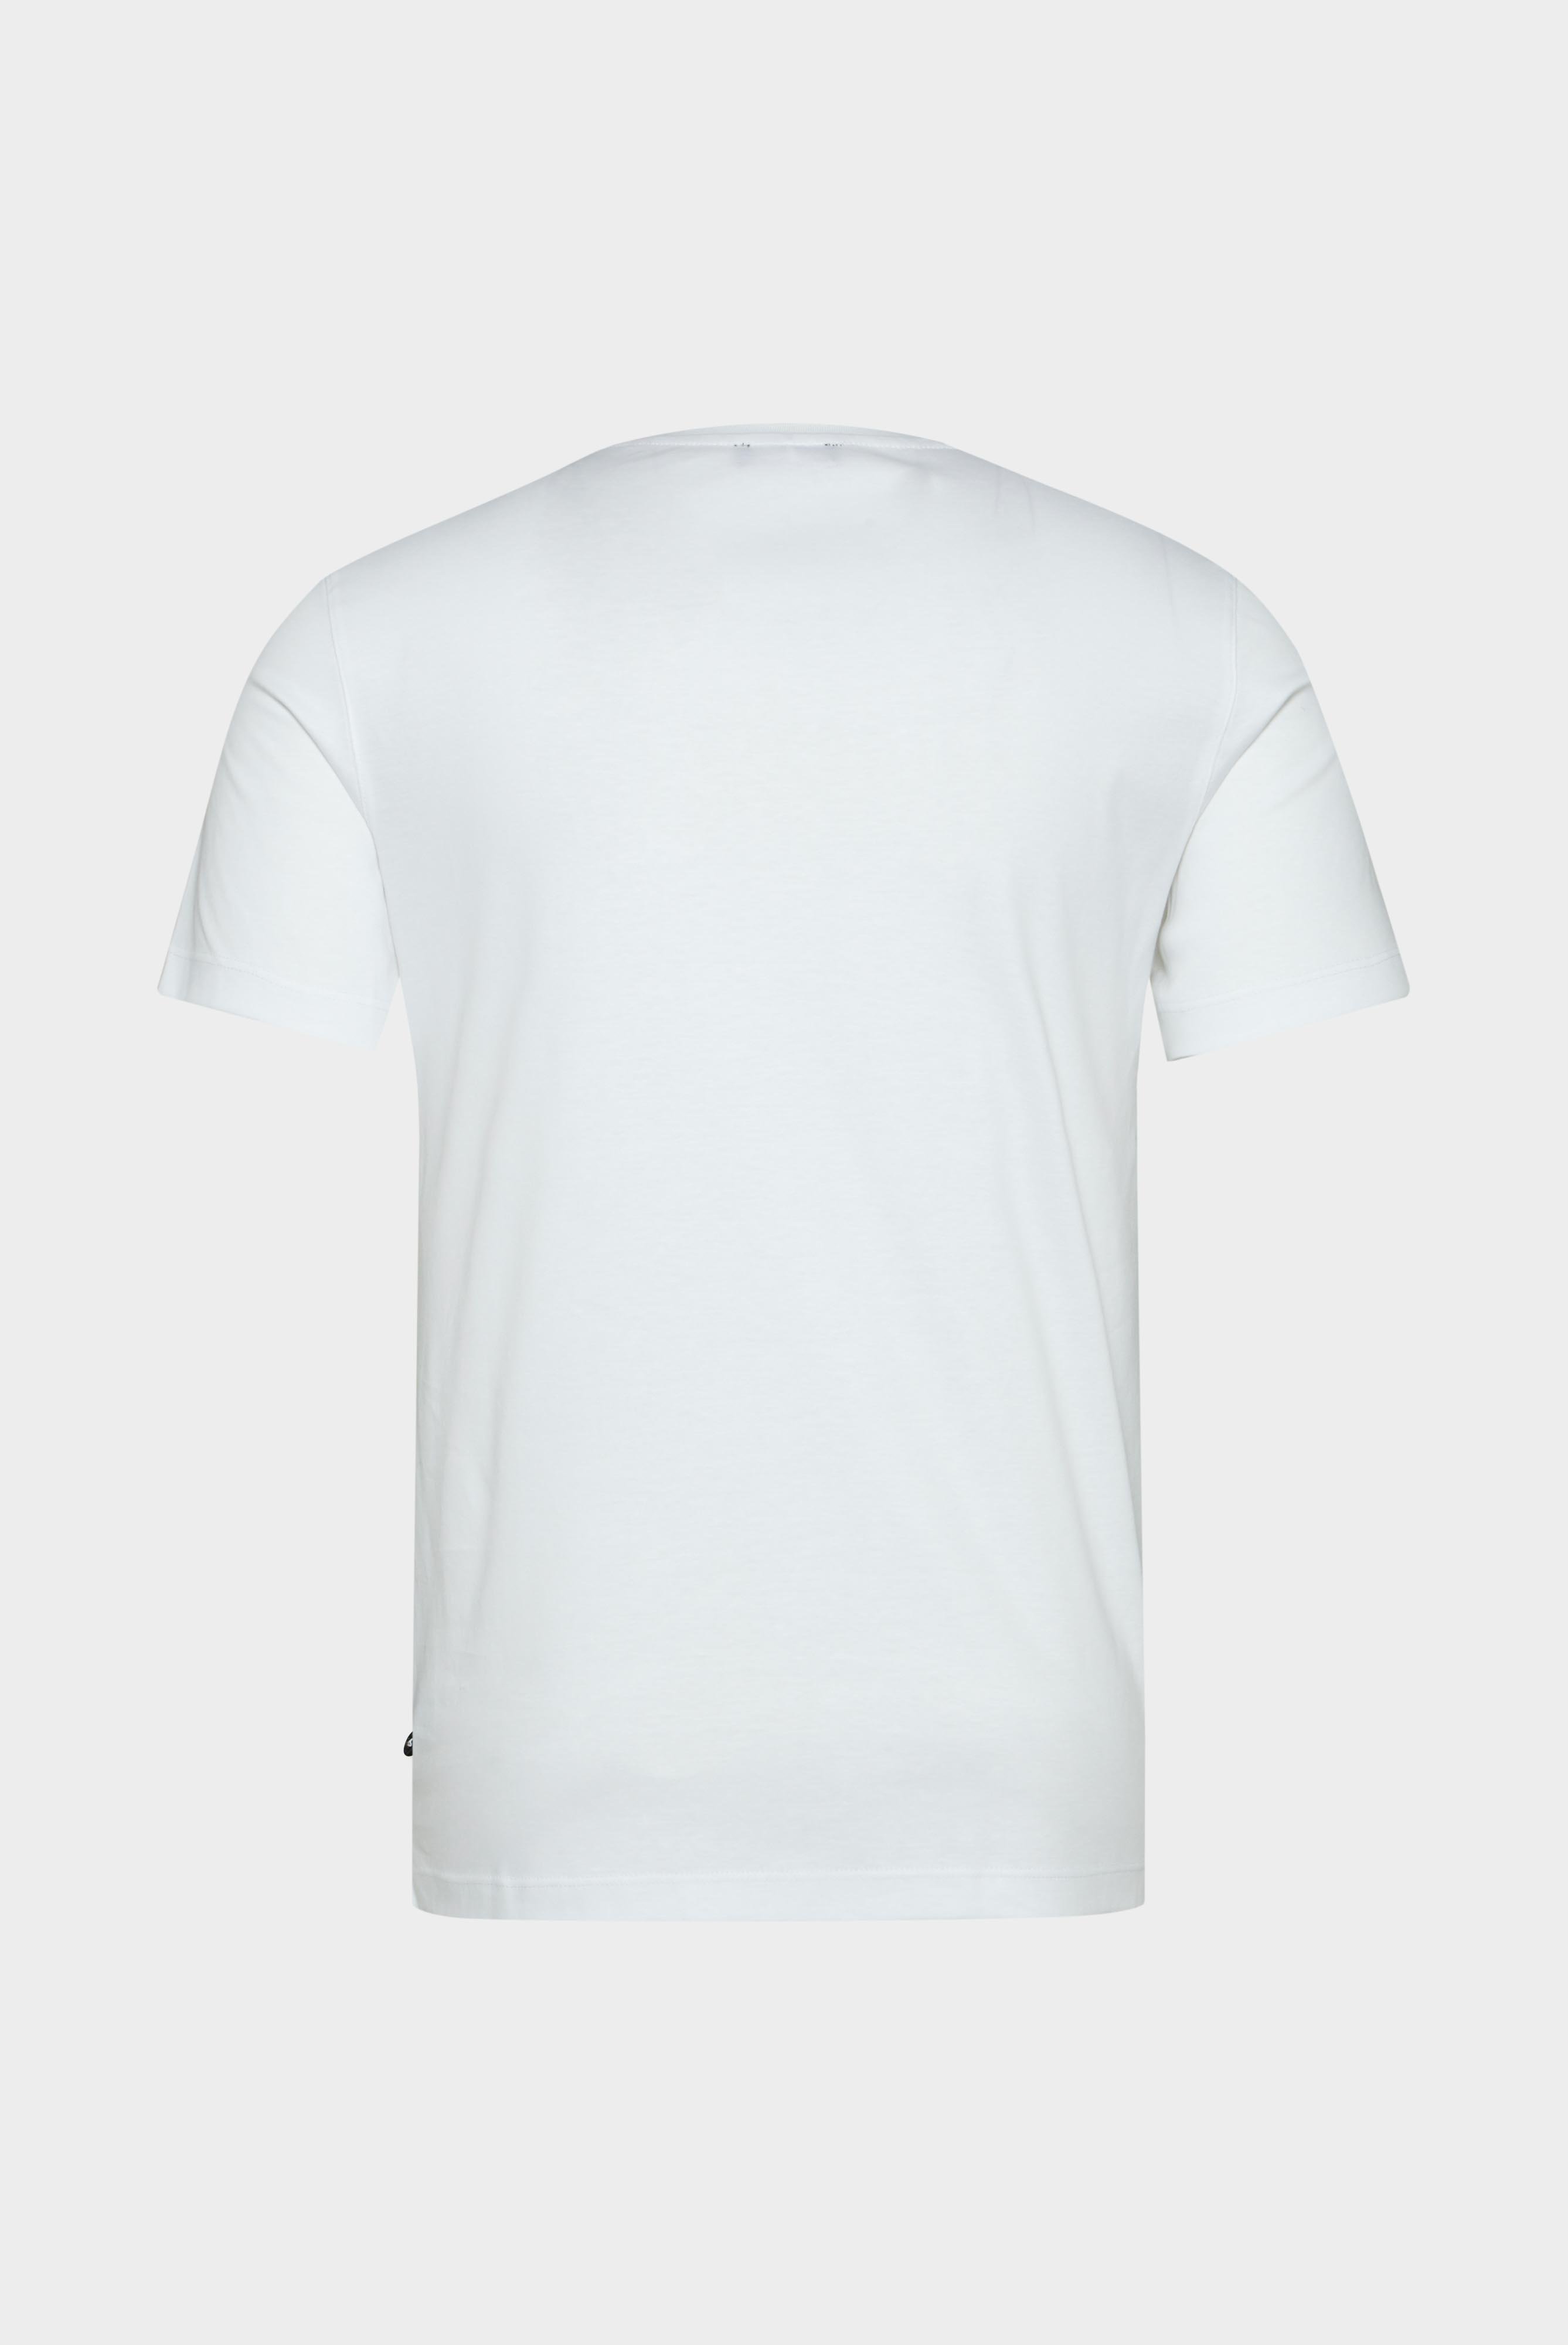 T-Shirts+Rundhals Jersey T-Shirt Slim Fit+20.1717.UX.180031.000.M